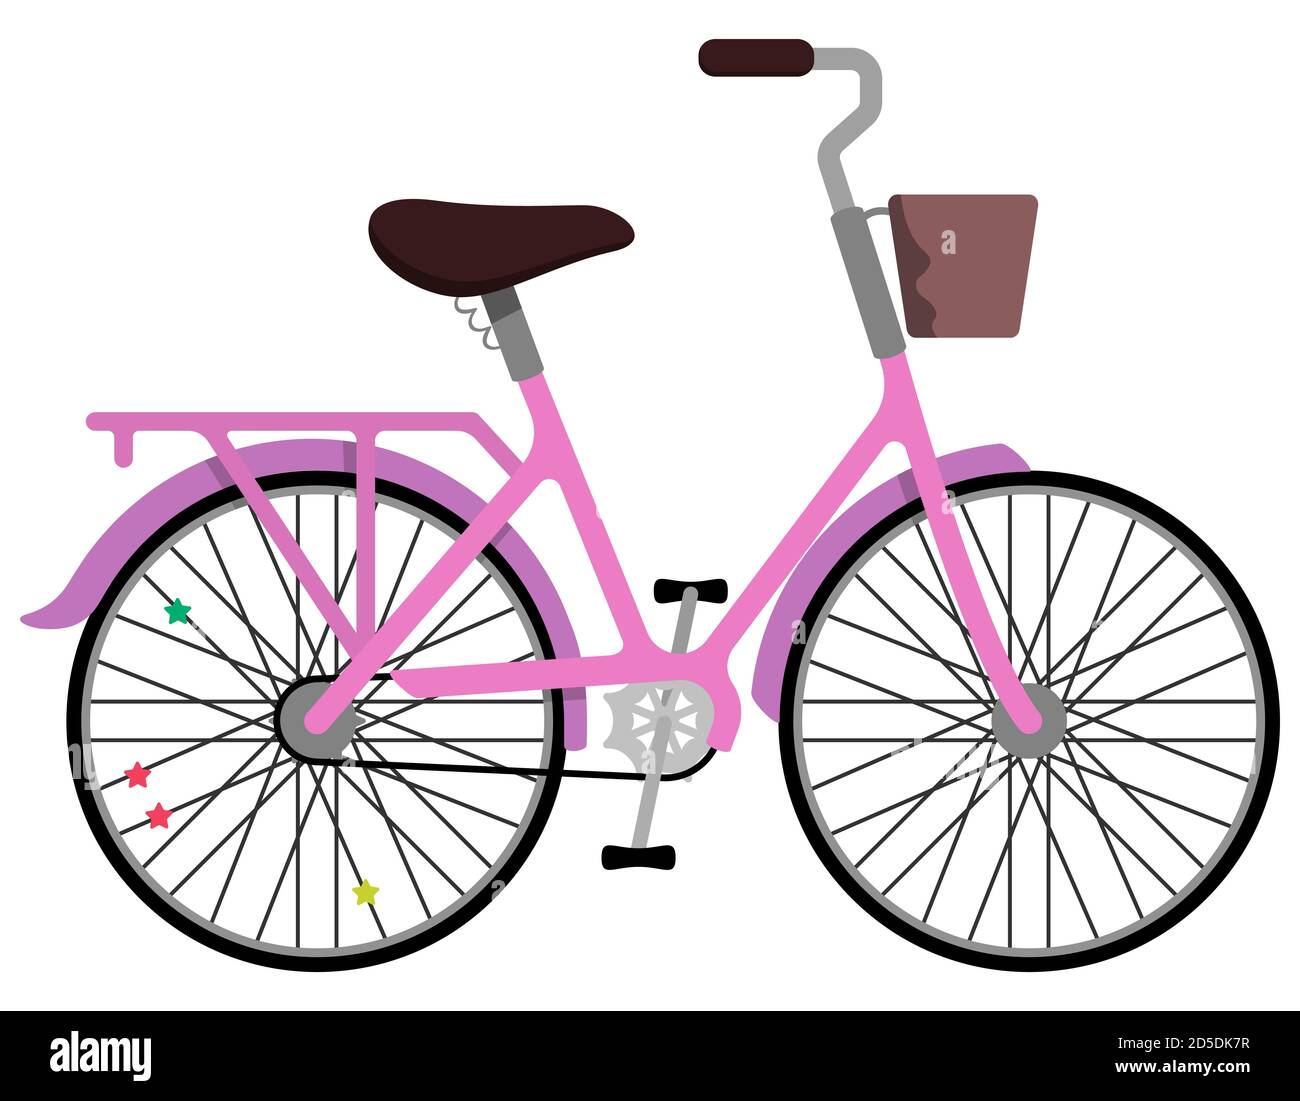 Cycle bike urban Stock Vector Images - Alamy